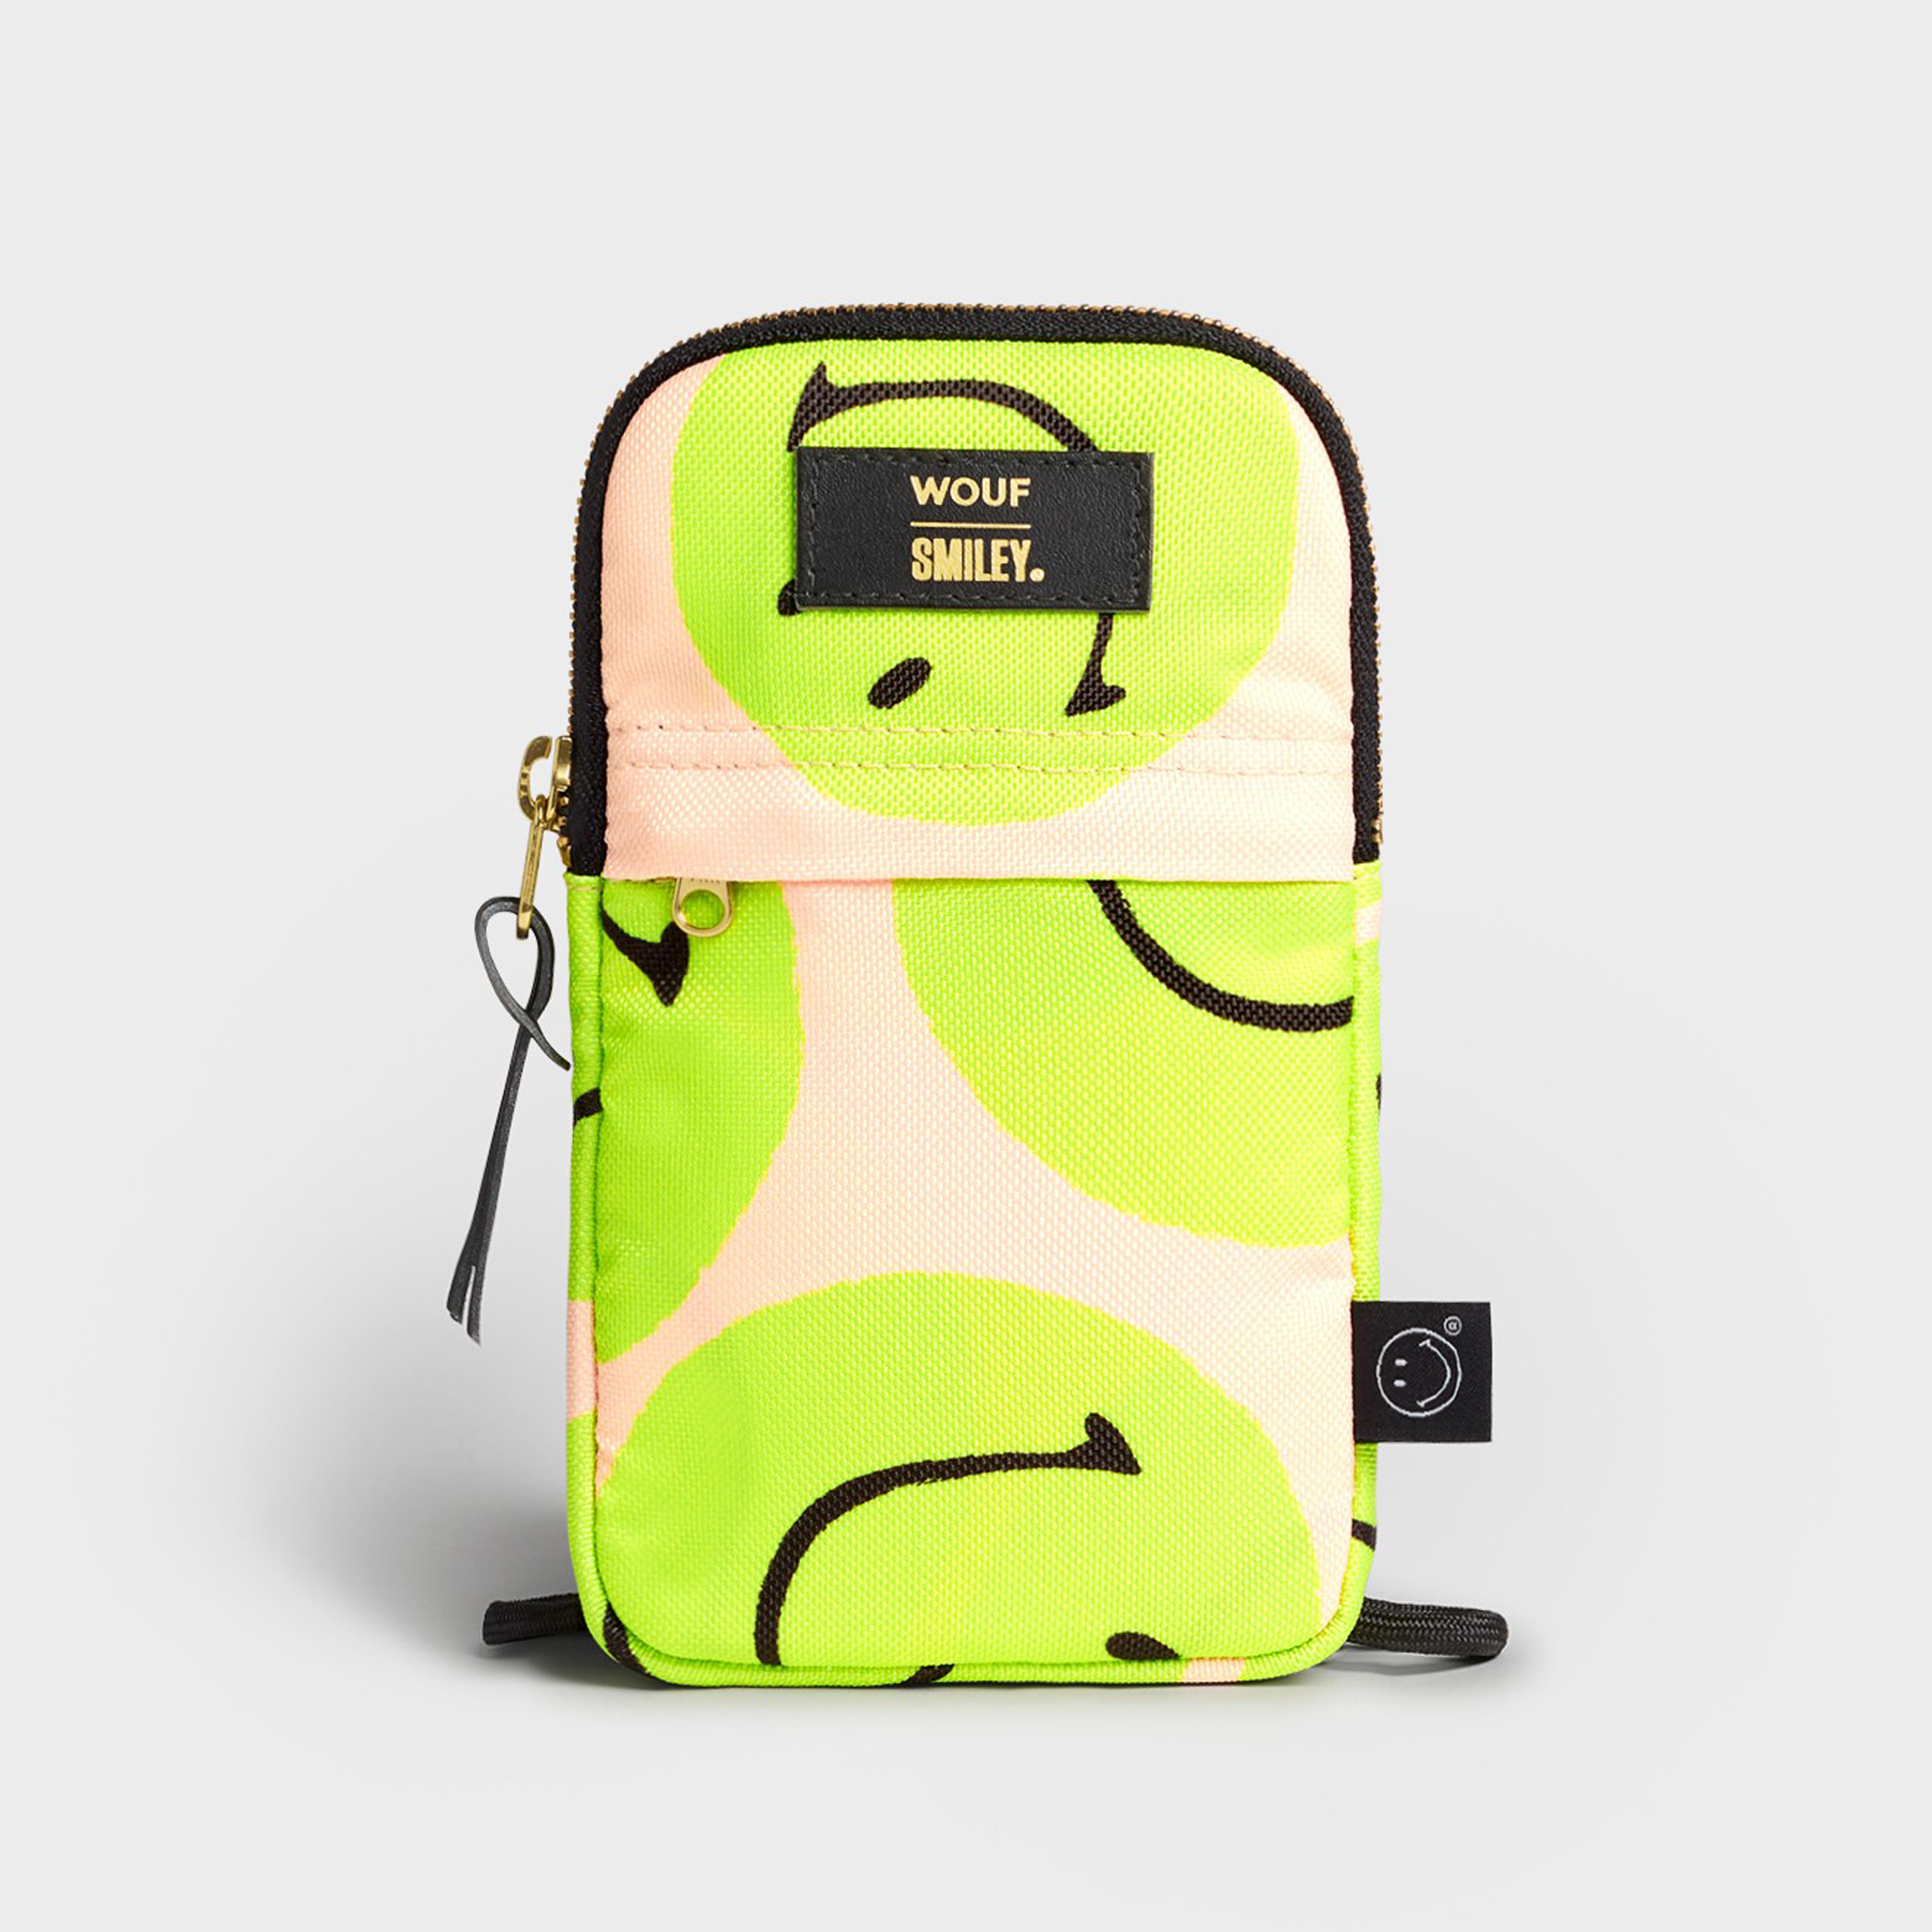 wouf-smiley-phone-bag-accessory-bag